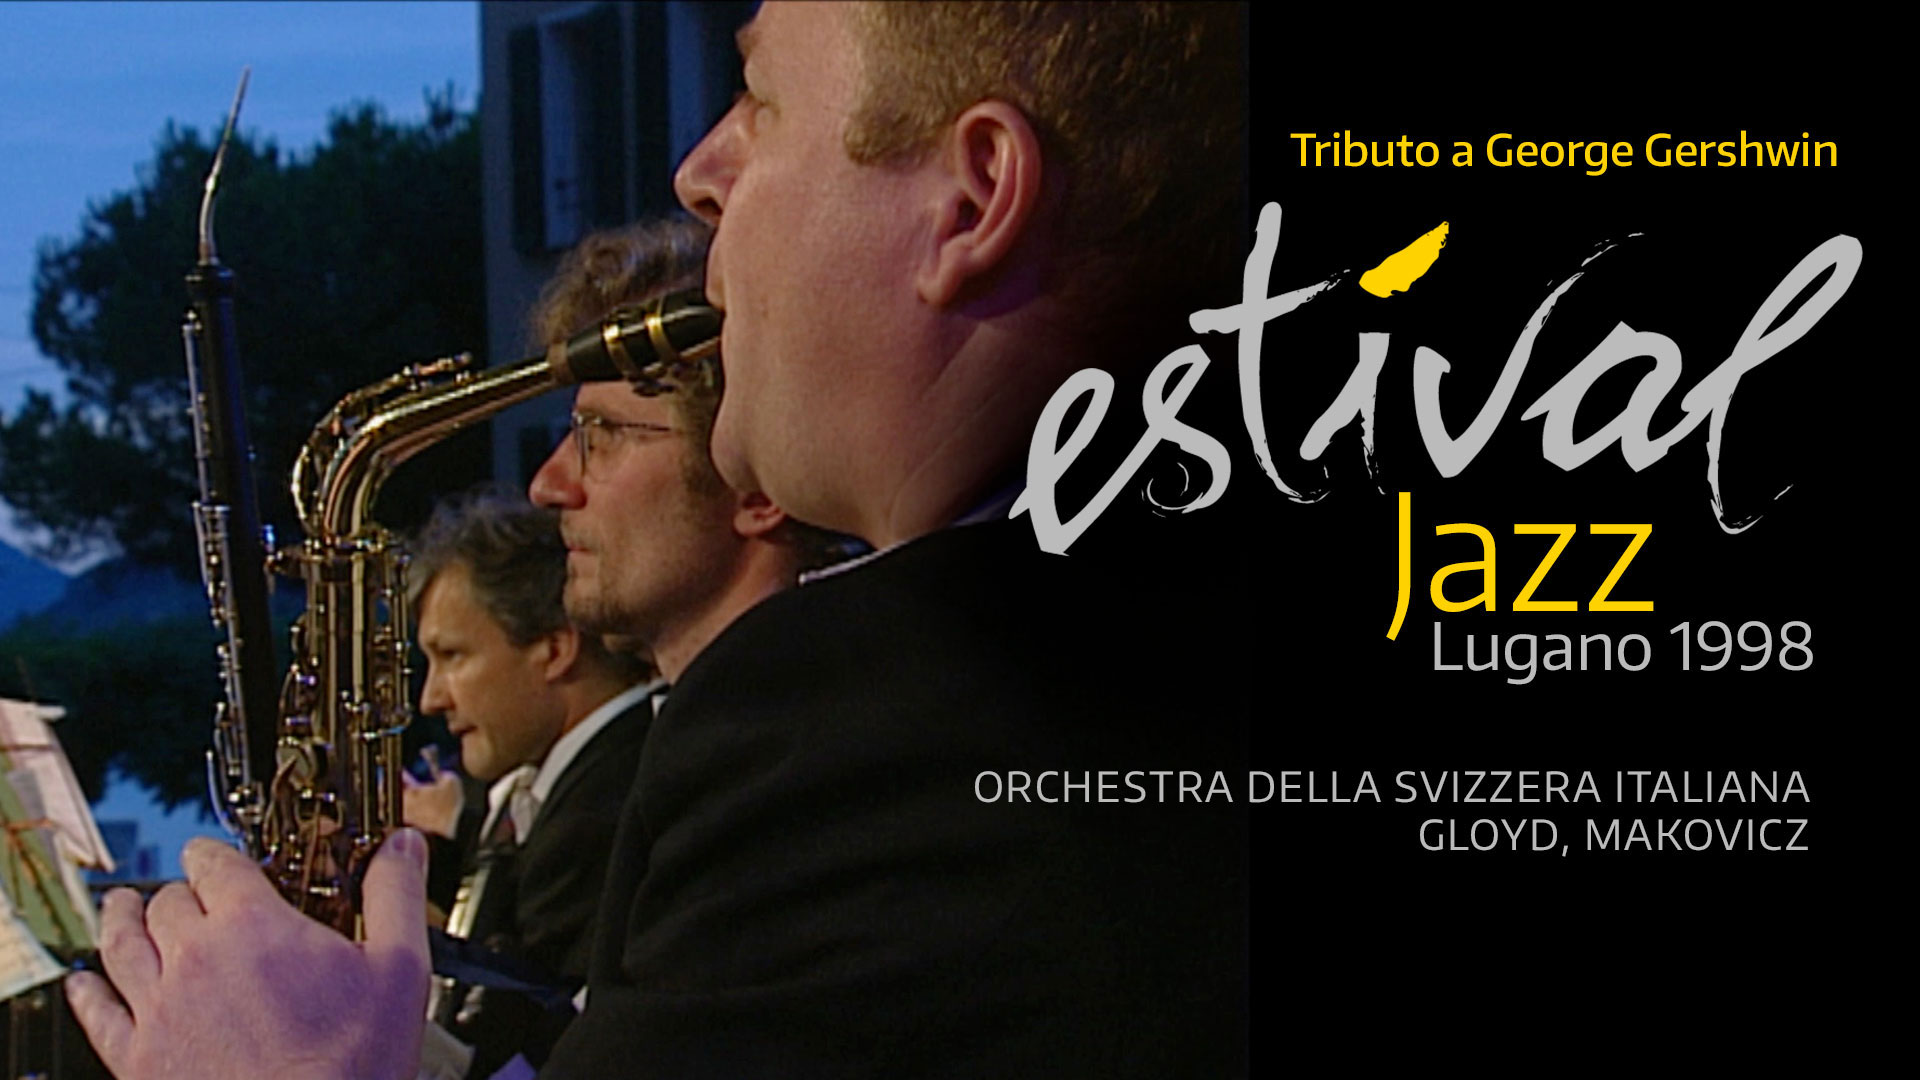 Poster Estival Jazz Lugano 1998 - Orchestra della Svizzera Italiana, Gloyd, Makovicz